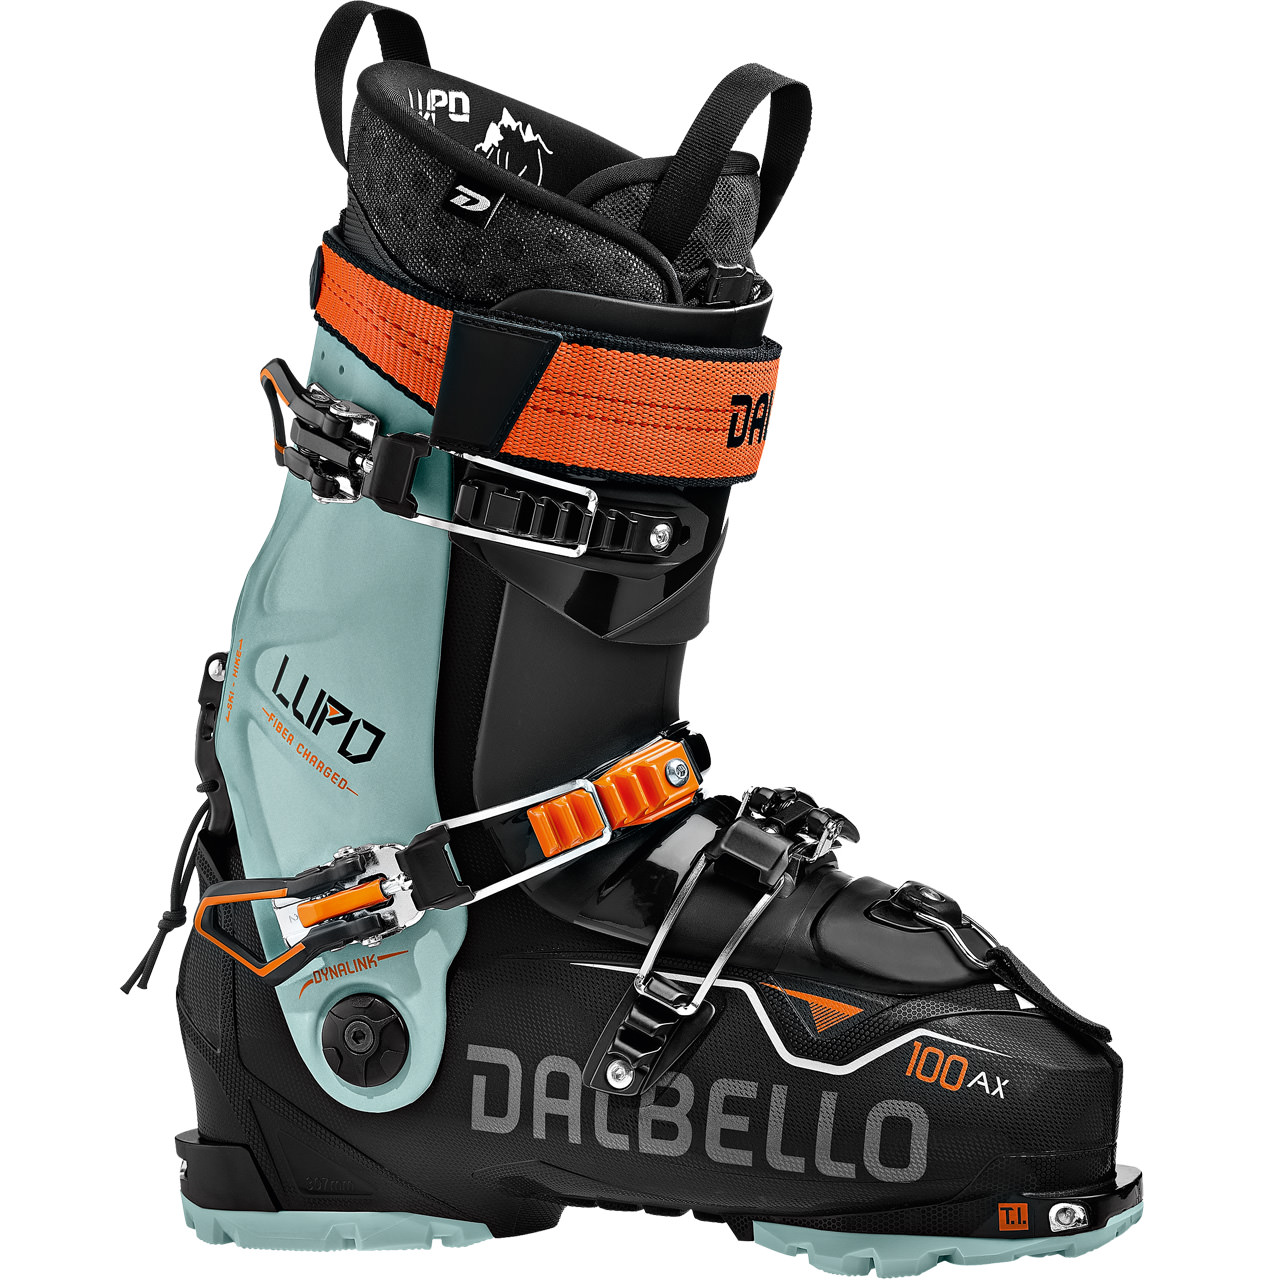 Лыжные ботинки для фрирайда Dalbello Lupo AX 100 Black/Pale Blue